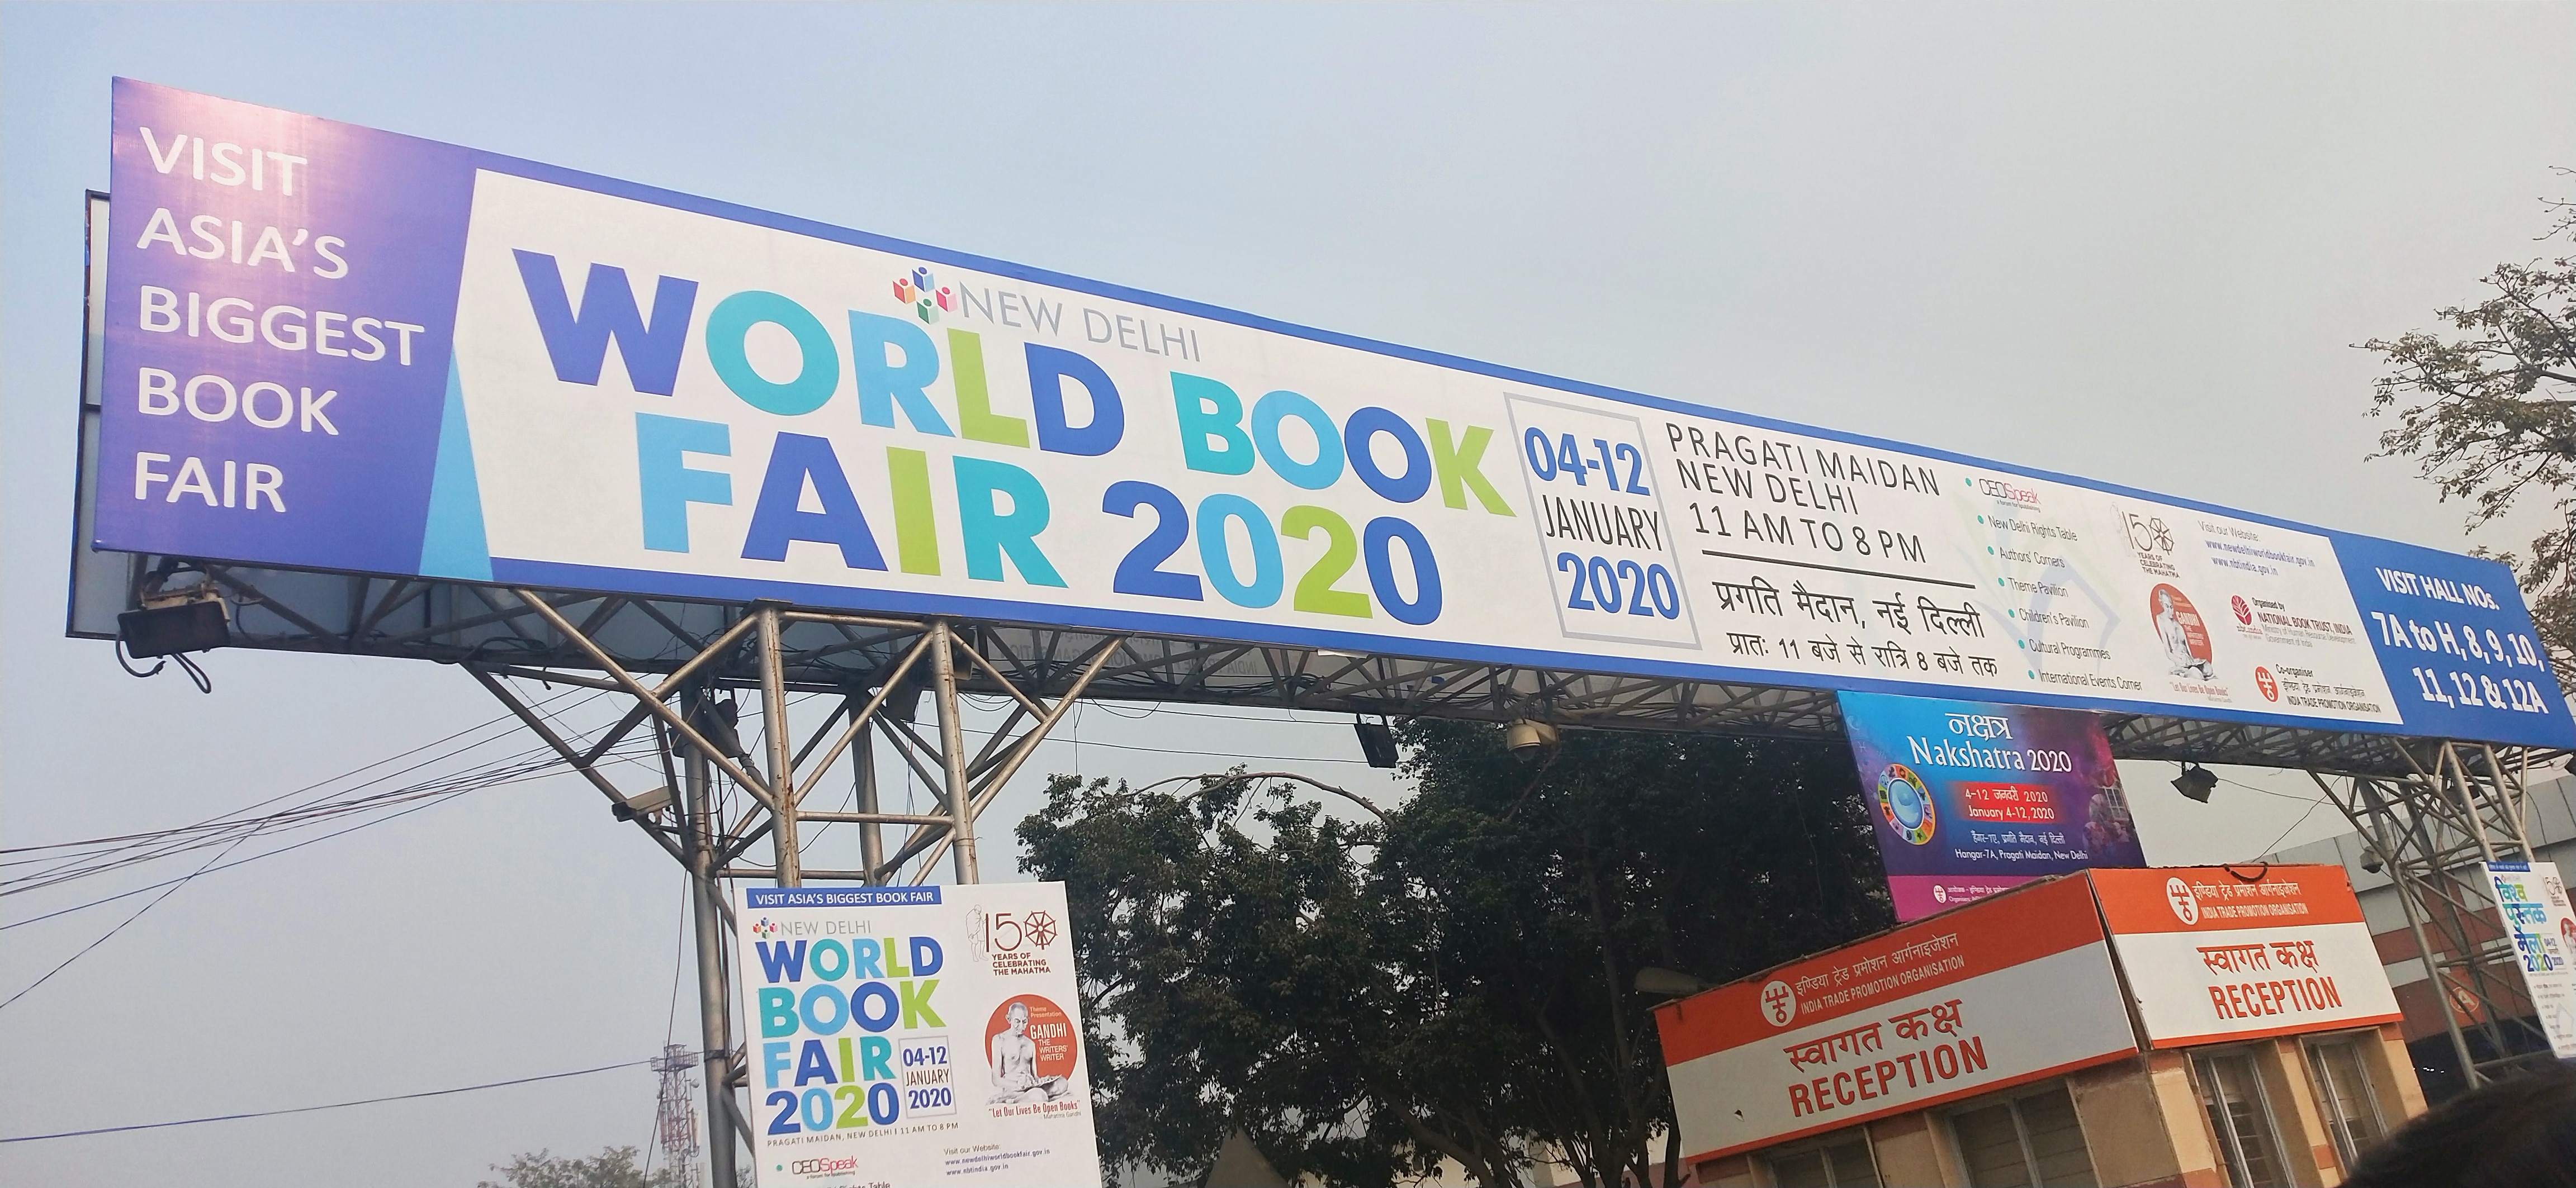 World Book Fair 2020 starts on 4th January